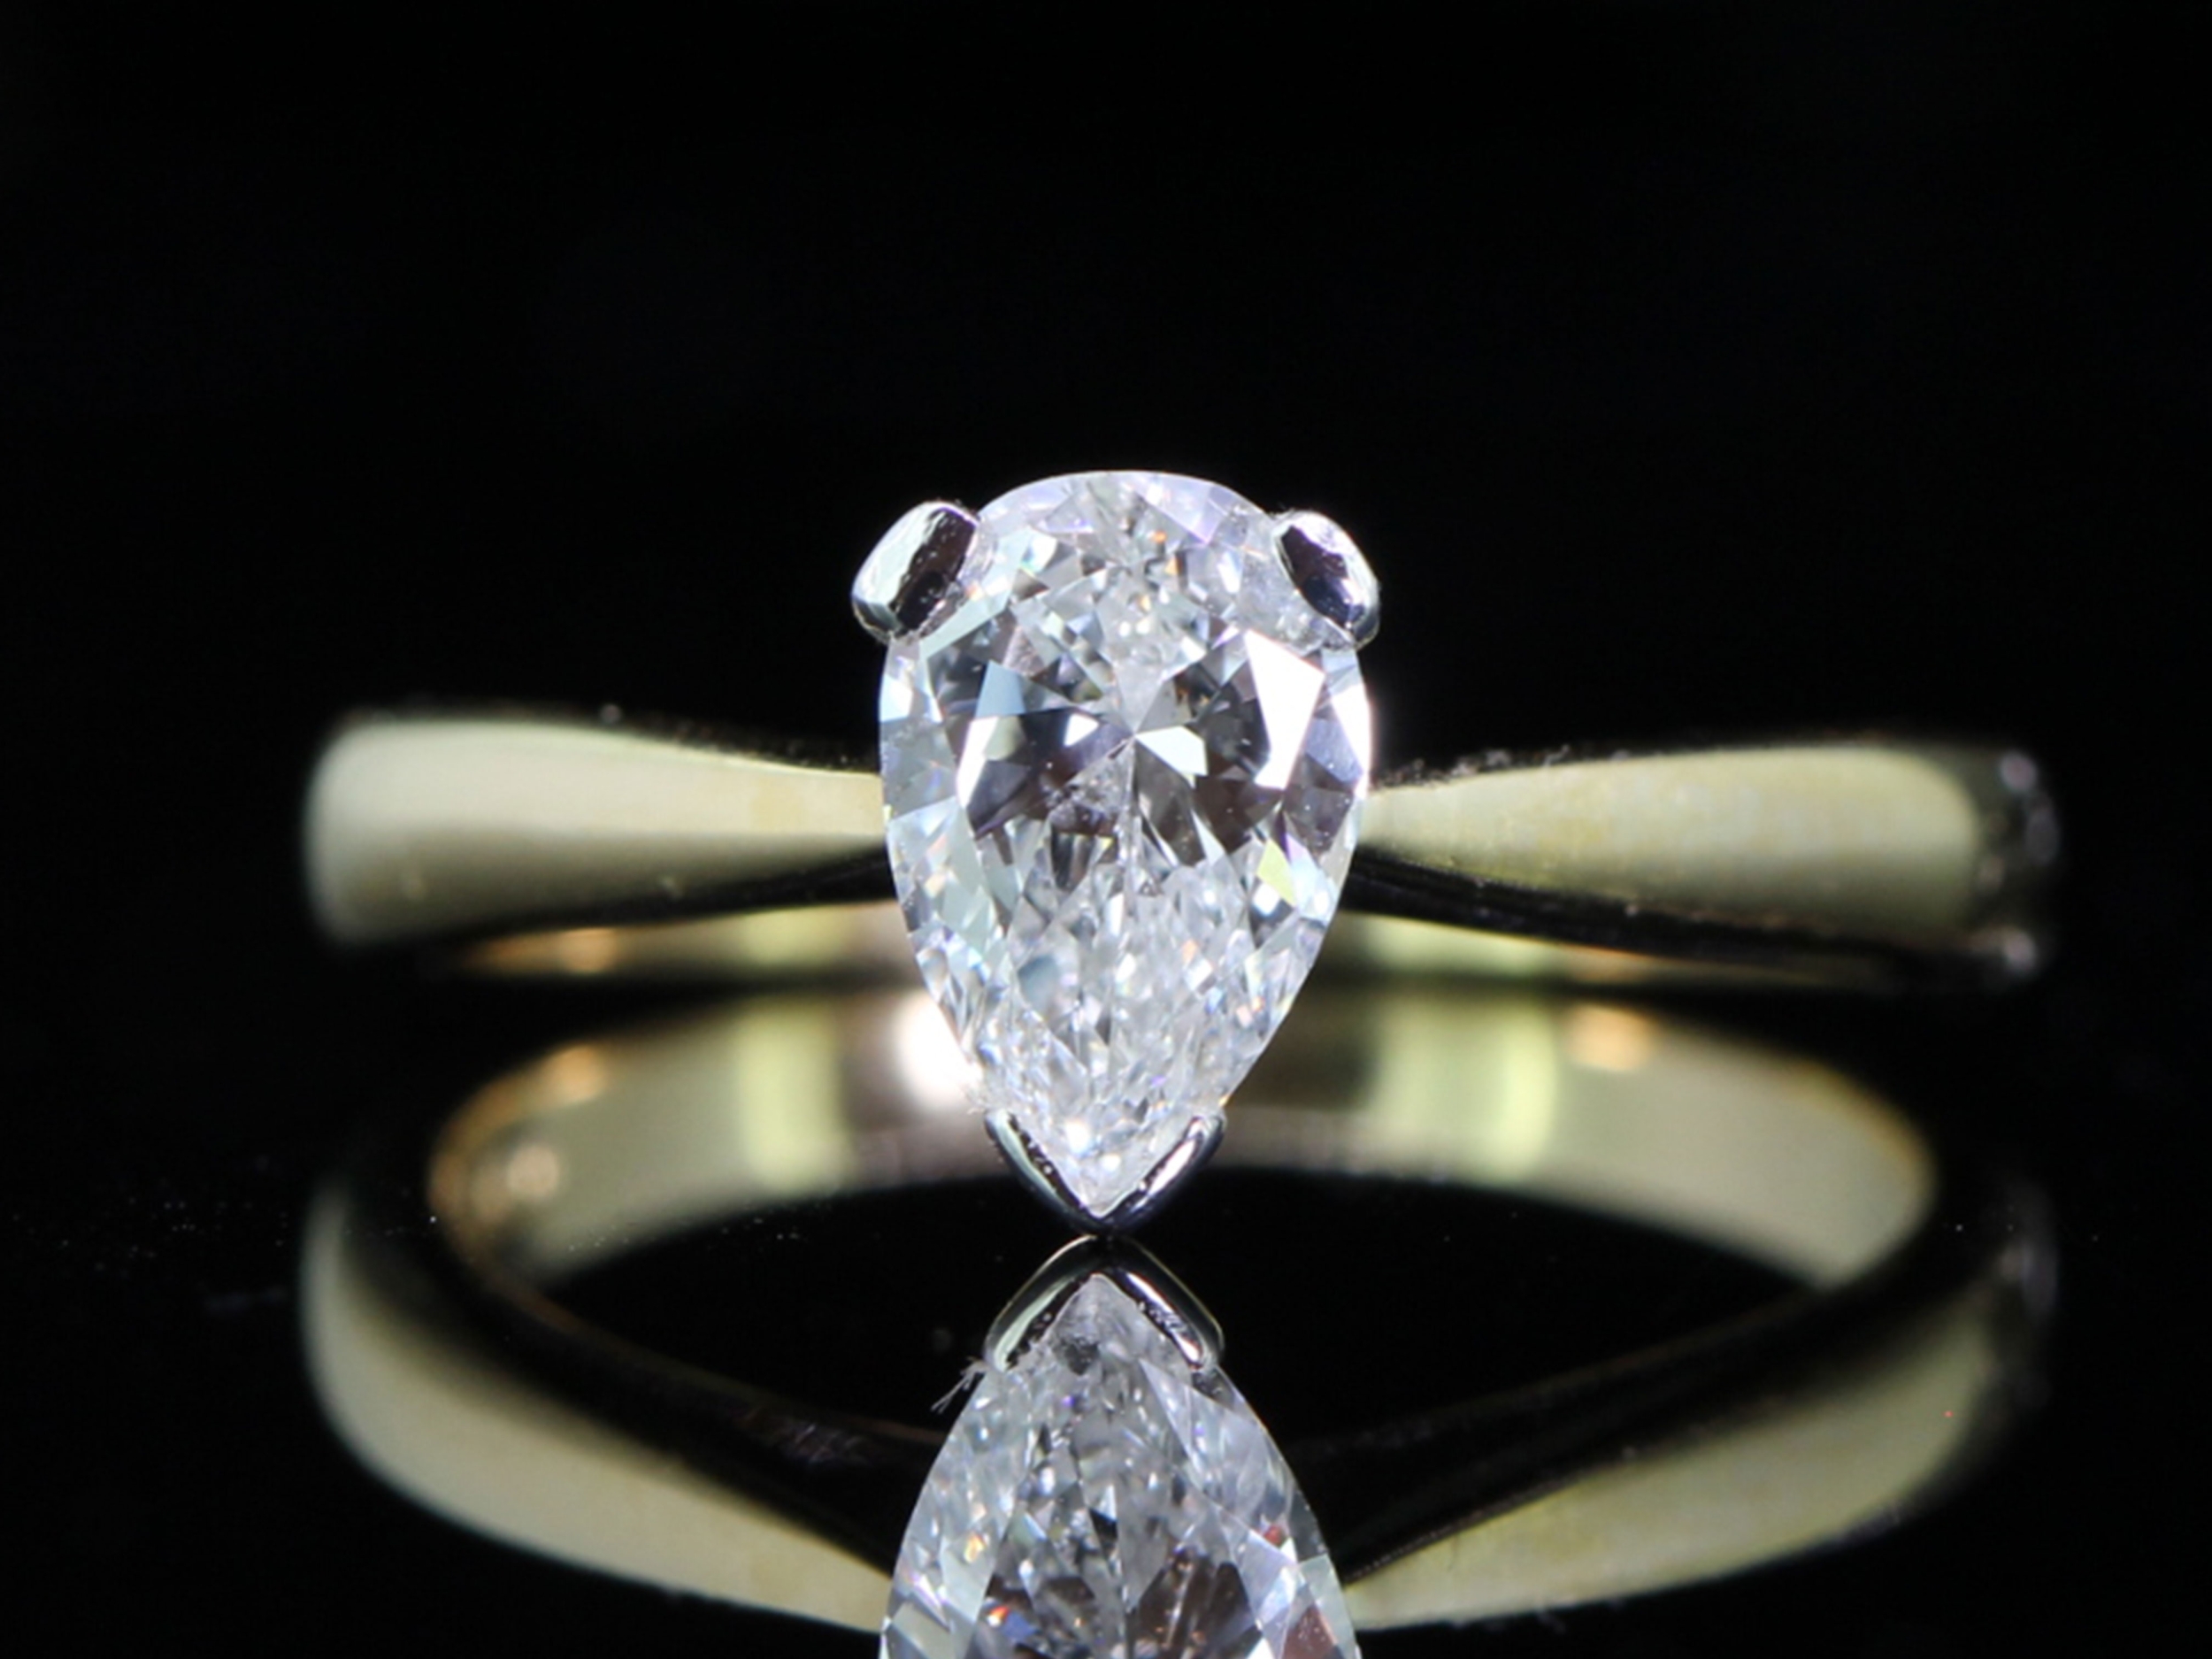 Stunning pear shape diamond 18 carat gold solitaire ring